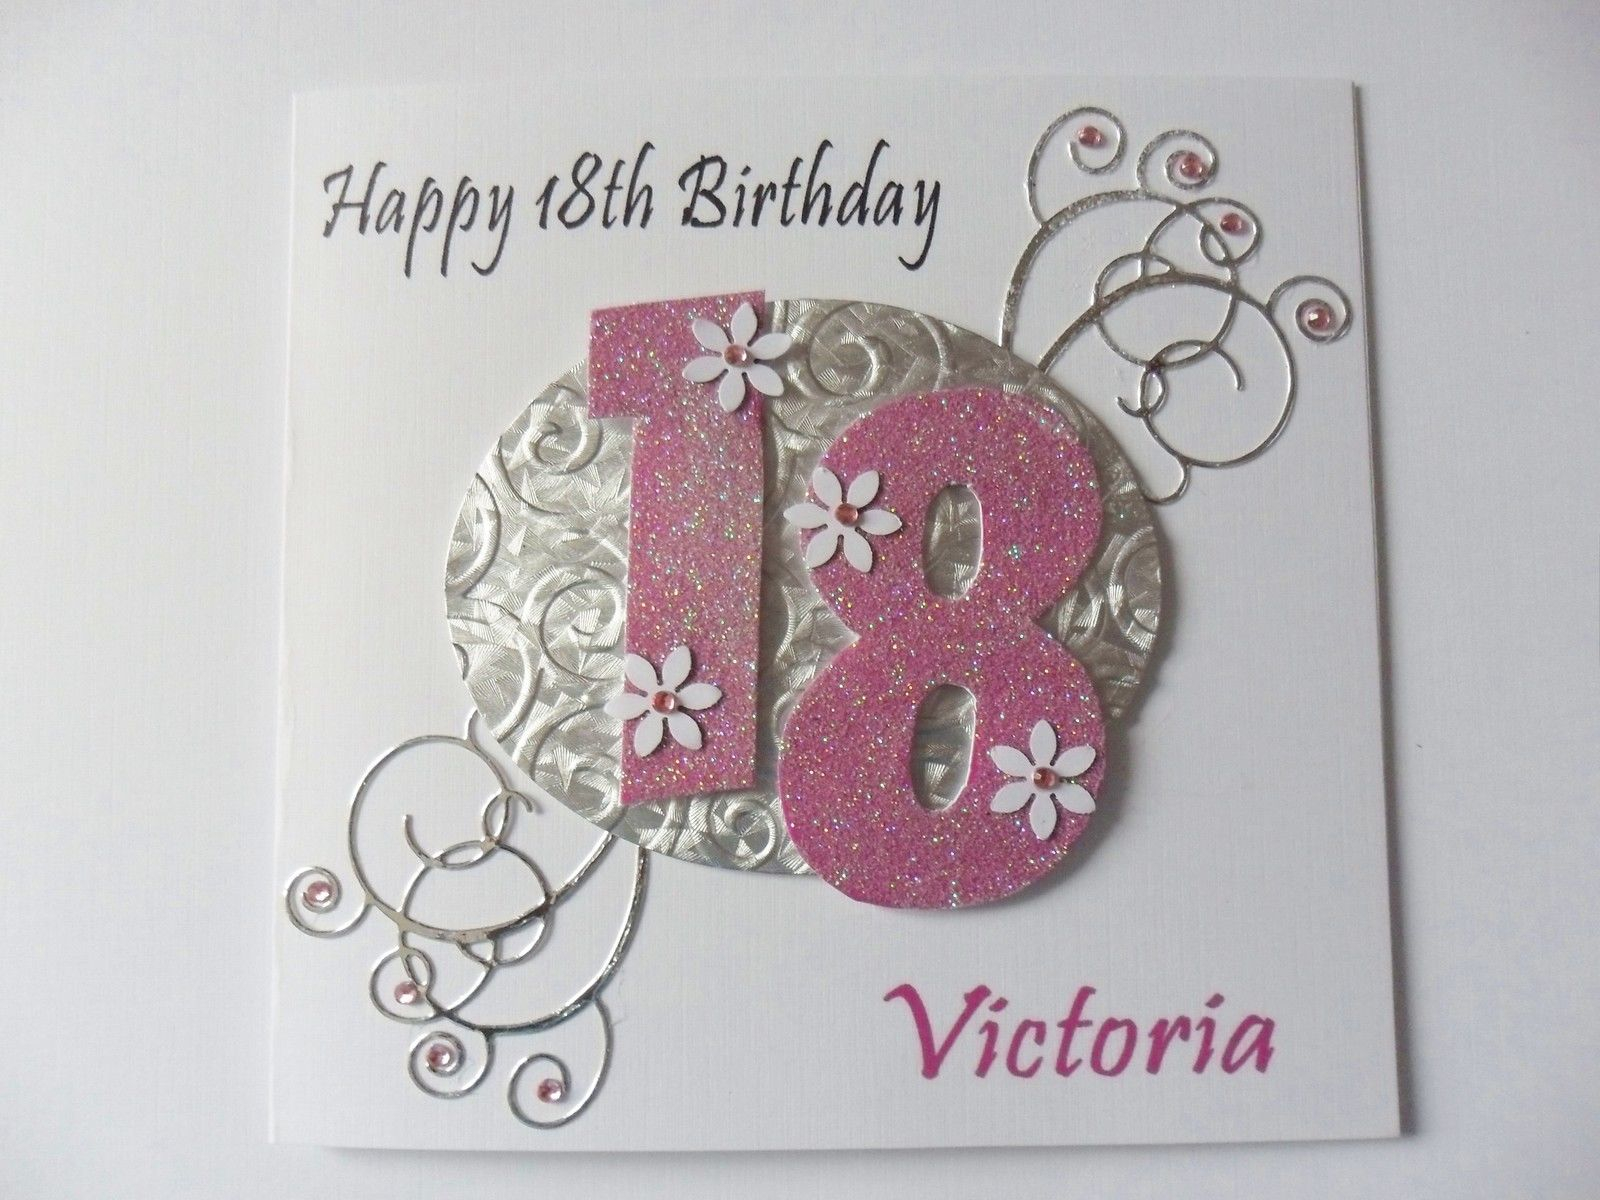 Ideas For 18Th Birthday Cards Handmade 18th Birthday Card Ideas Handmade 3 Happy Birthday World